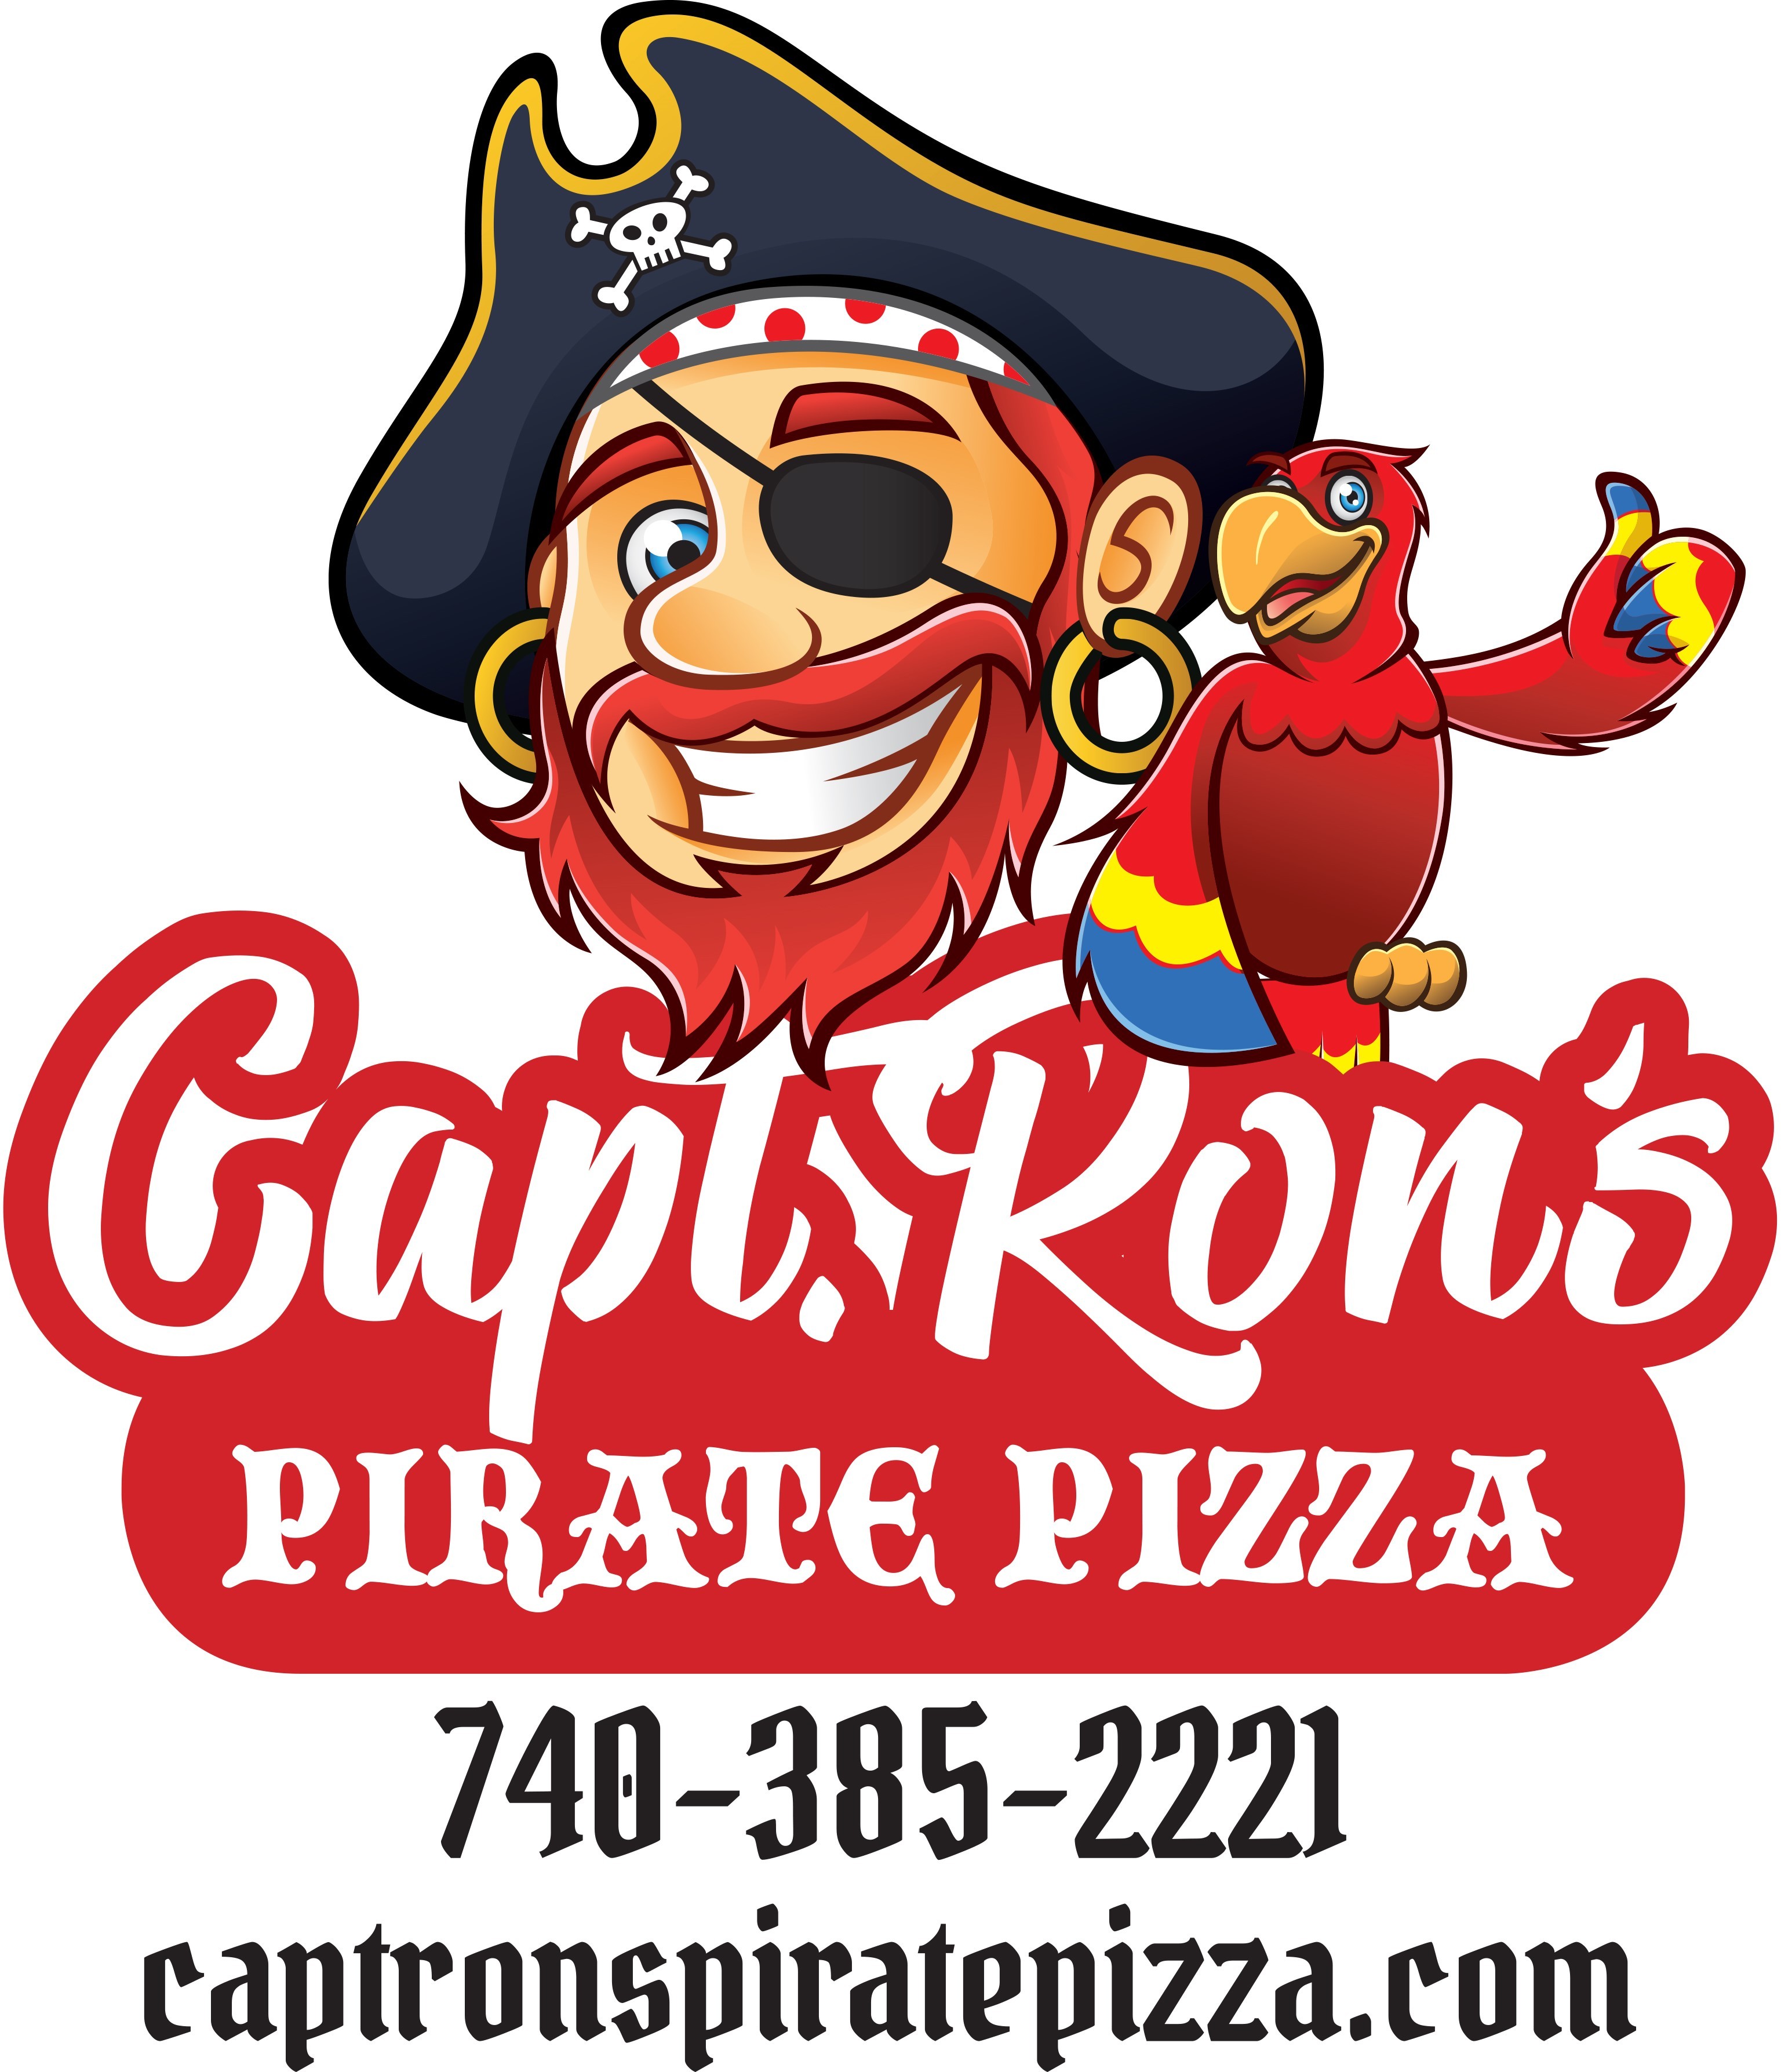 Captain's Rons Pizza